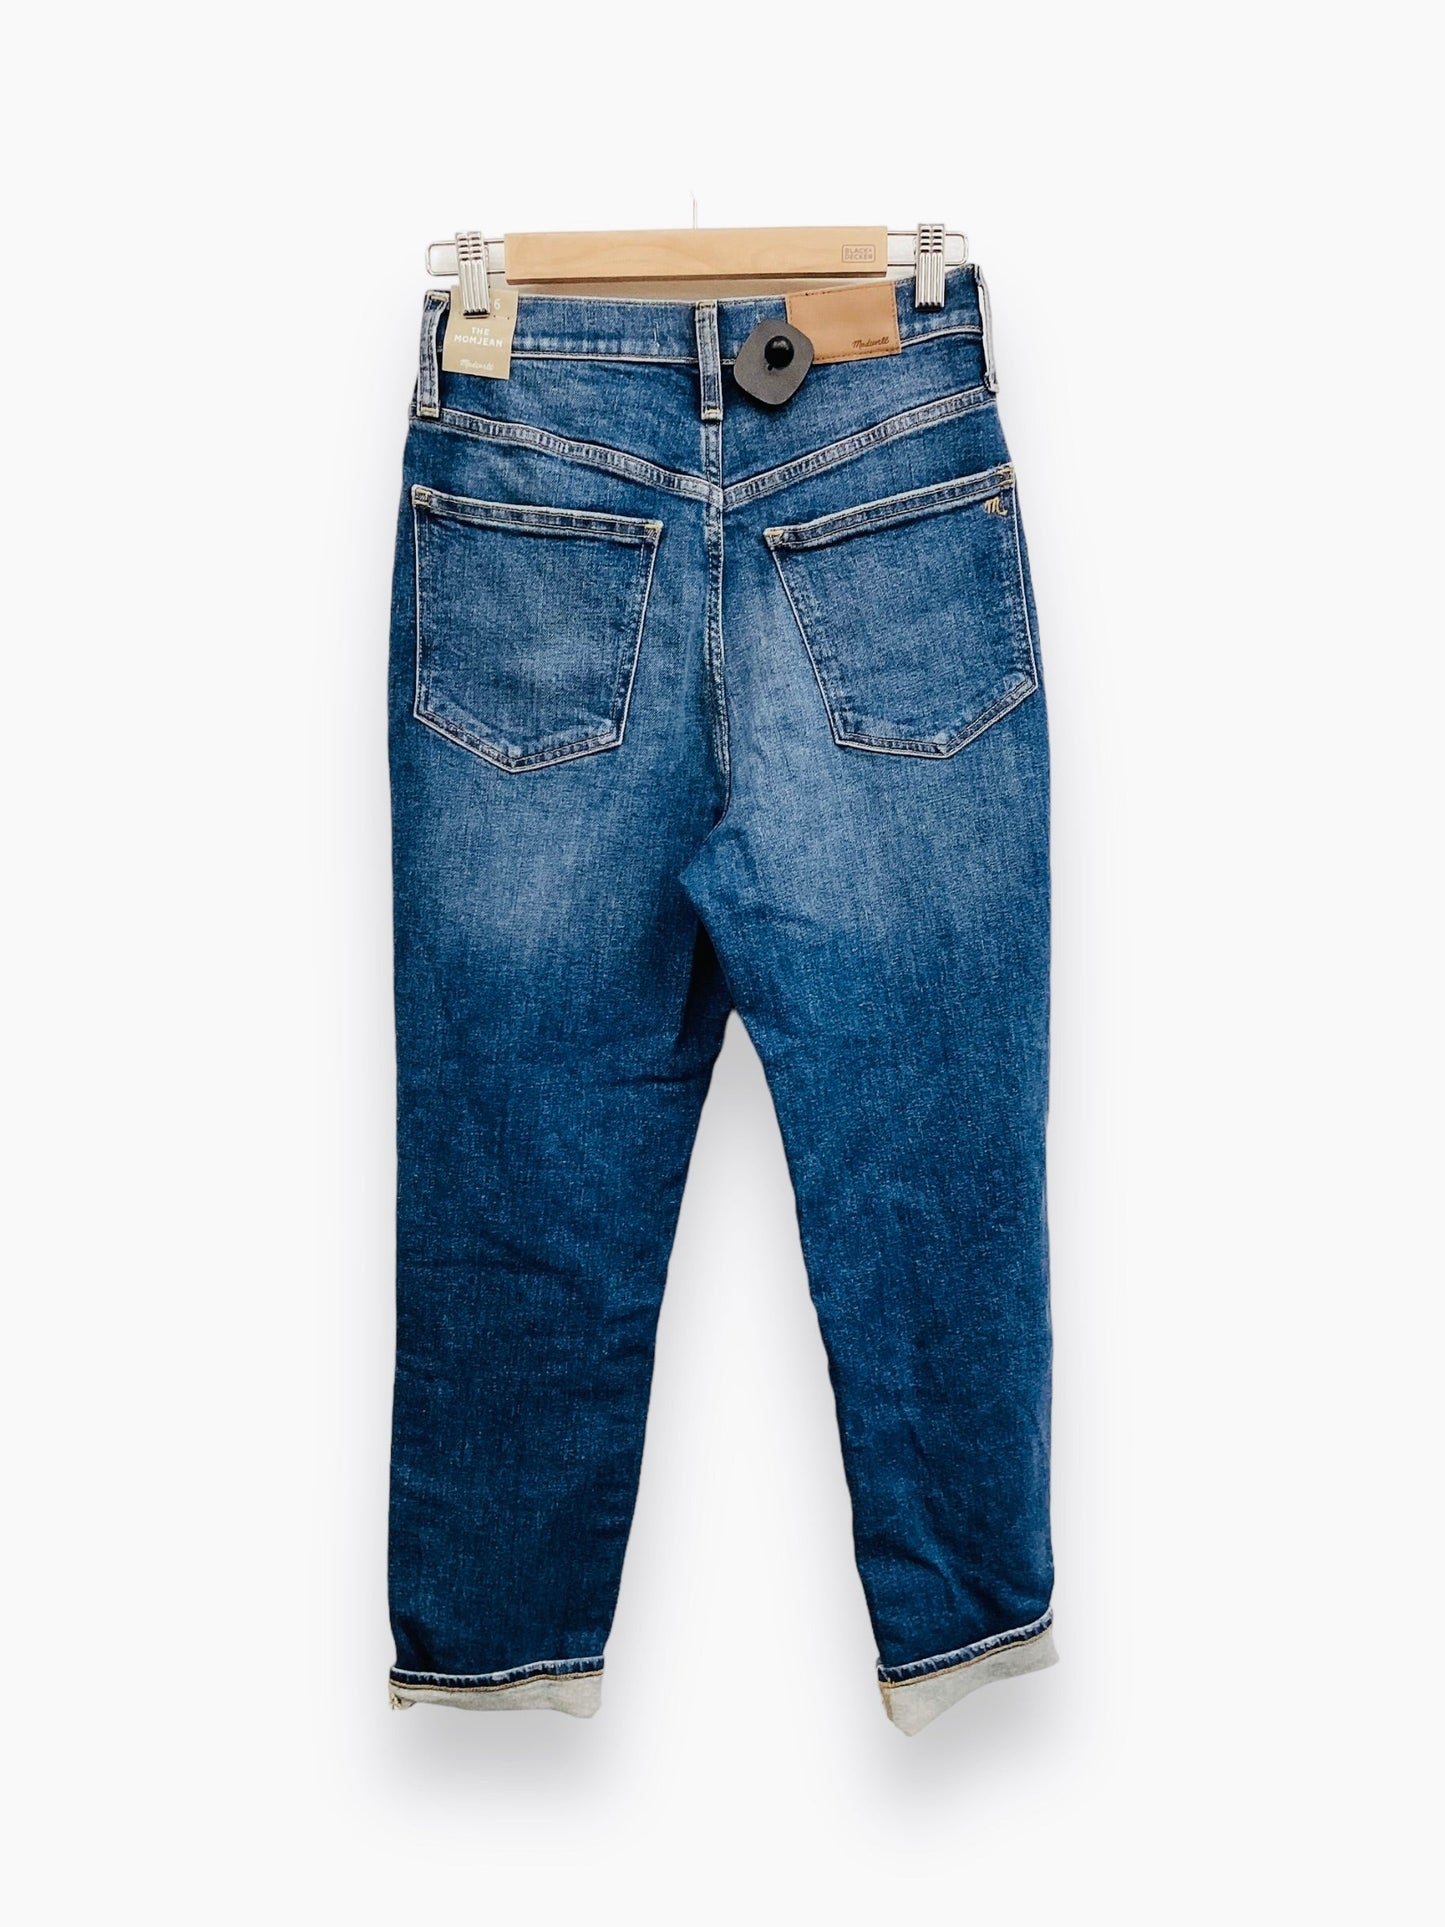 NWT Blue Denim Jeans Boyfriend Madewell, Size 2